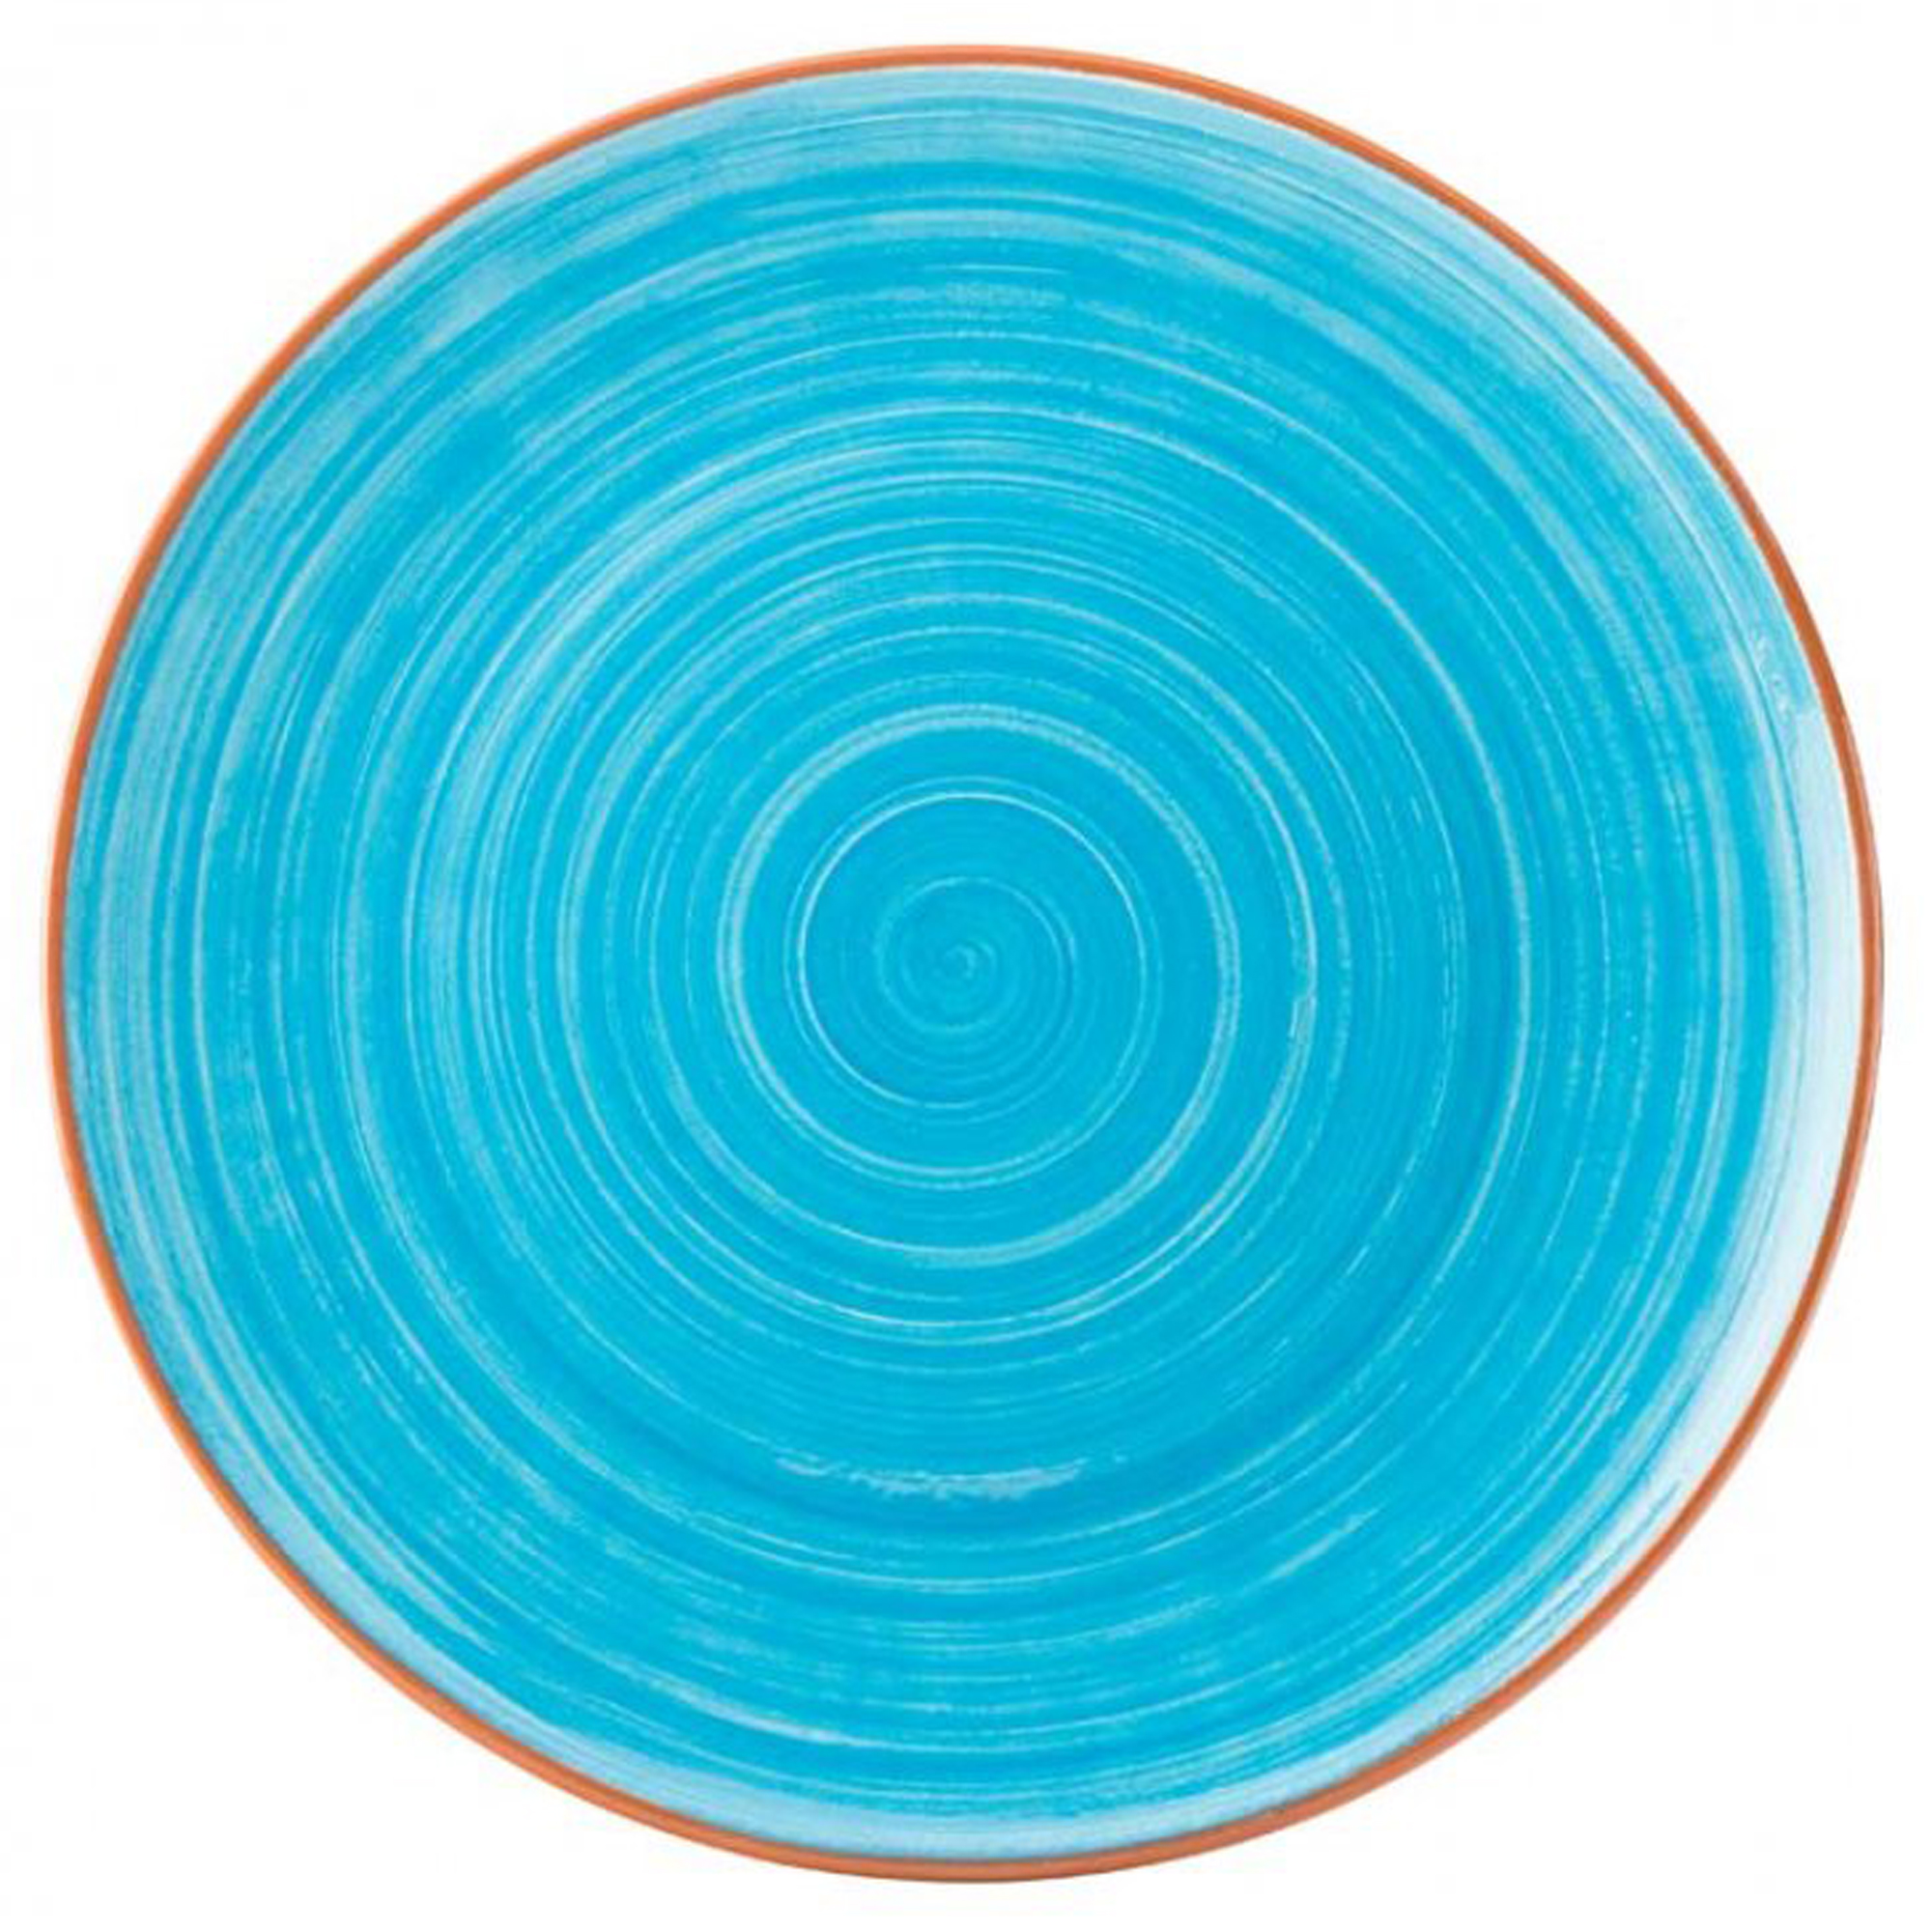 Flat plate. Голубая тарелка. Тарелка голубая с разводами. Тарелка с кругами. Тарелка голубая круглая.